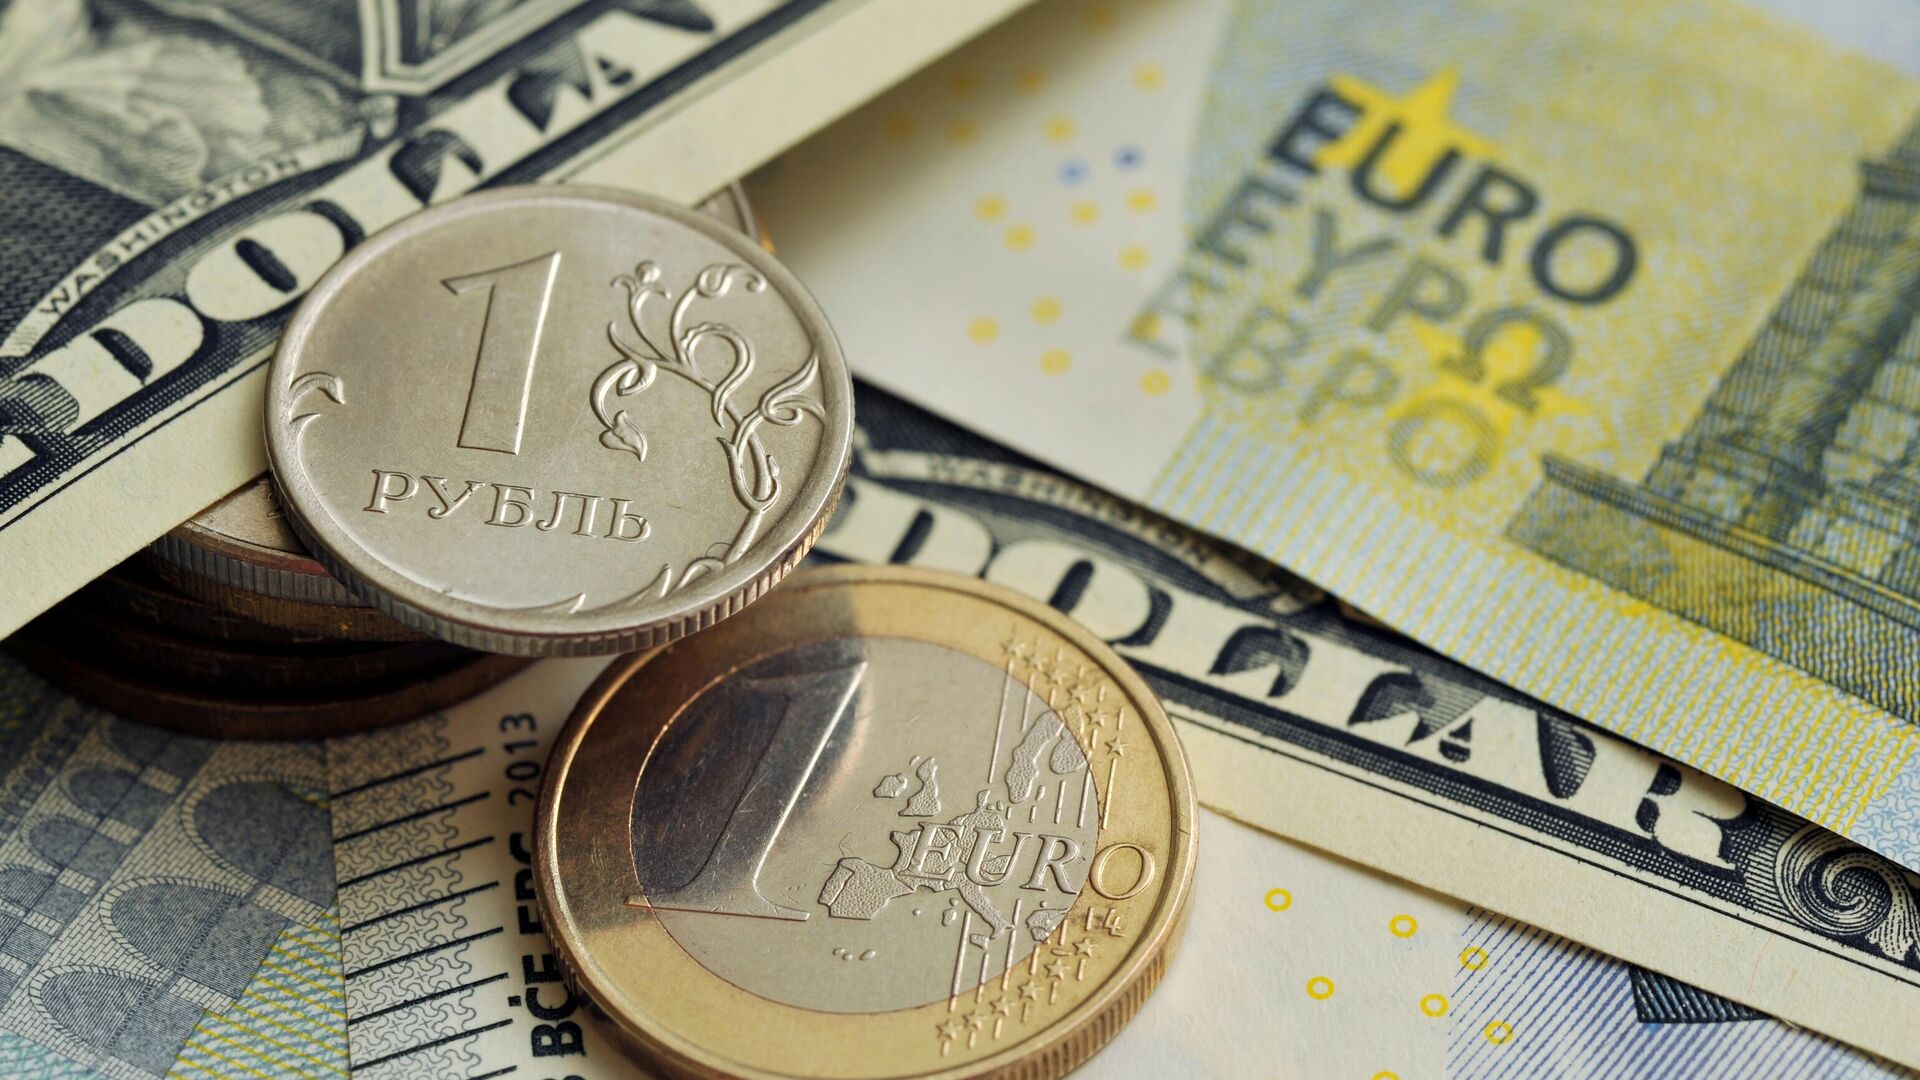 Монеты номиналом 1 рубль и 1 евро на фоне банкнот номиналом 1 доллар США и 5 евро. - Sputnik Таджикистан, 1920, 25.05.2022